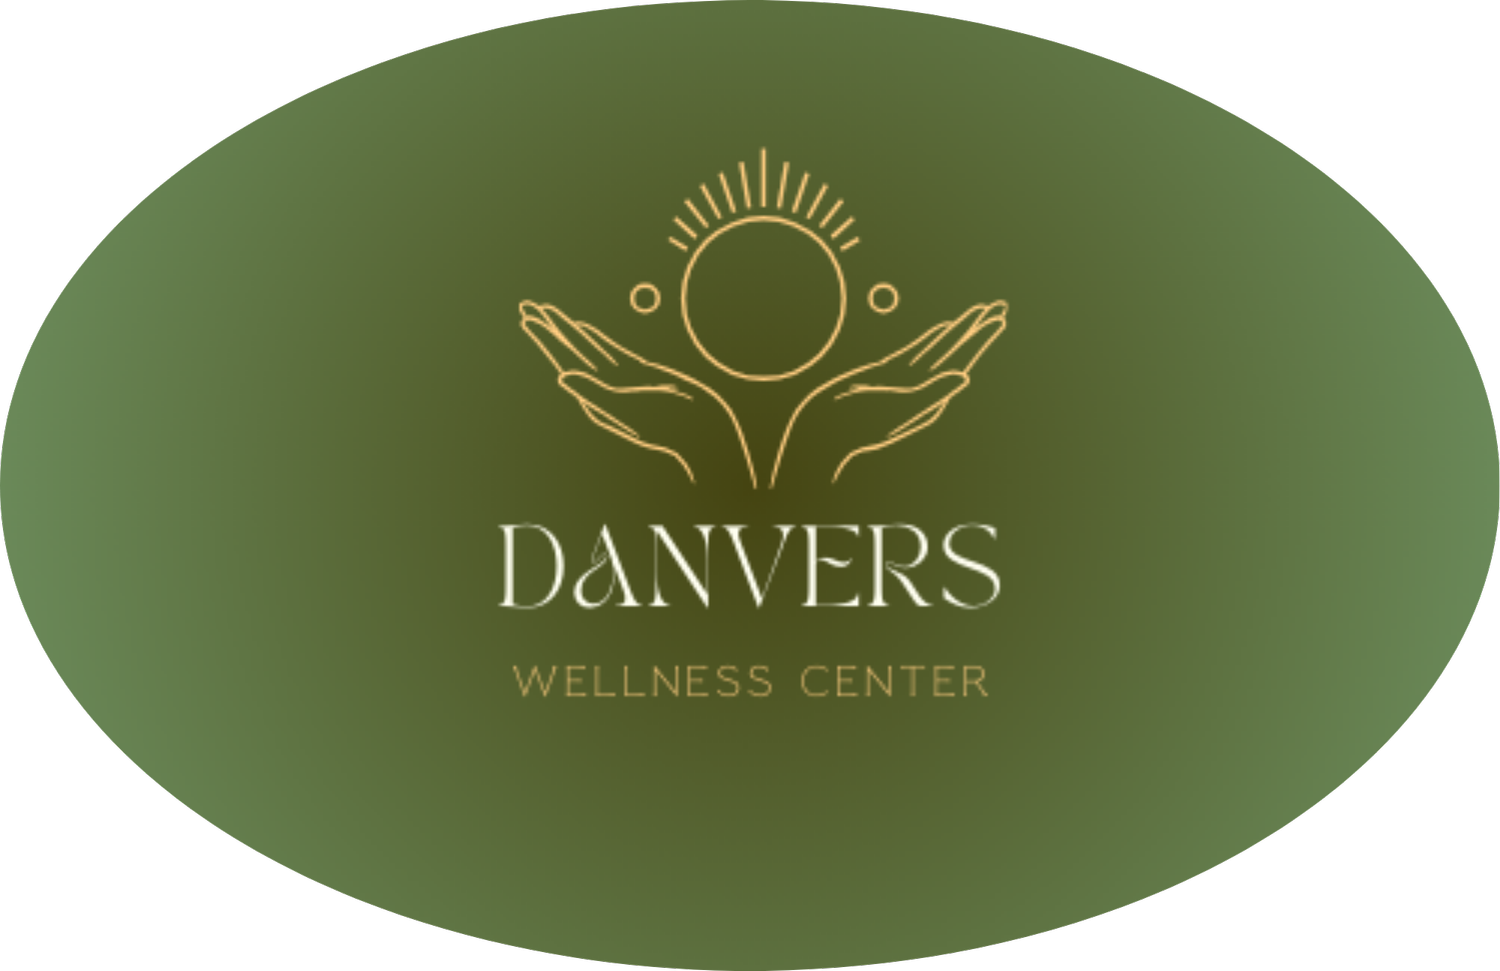 Danvers Wellness Center by Soul Warrior